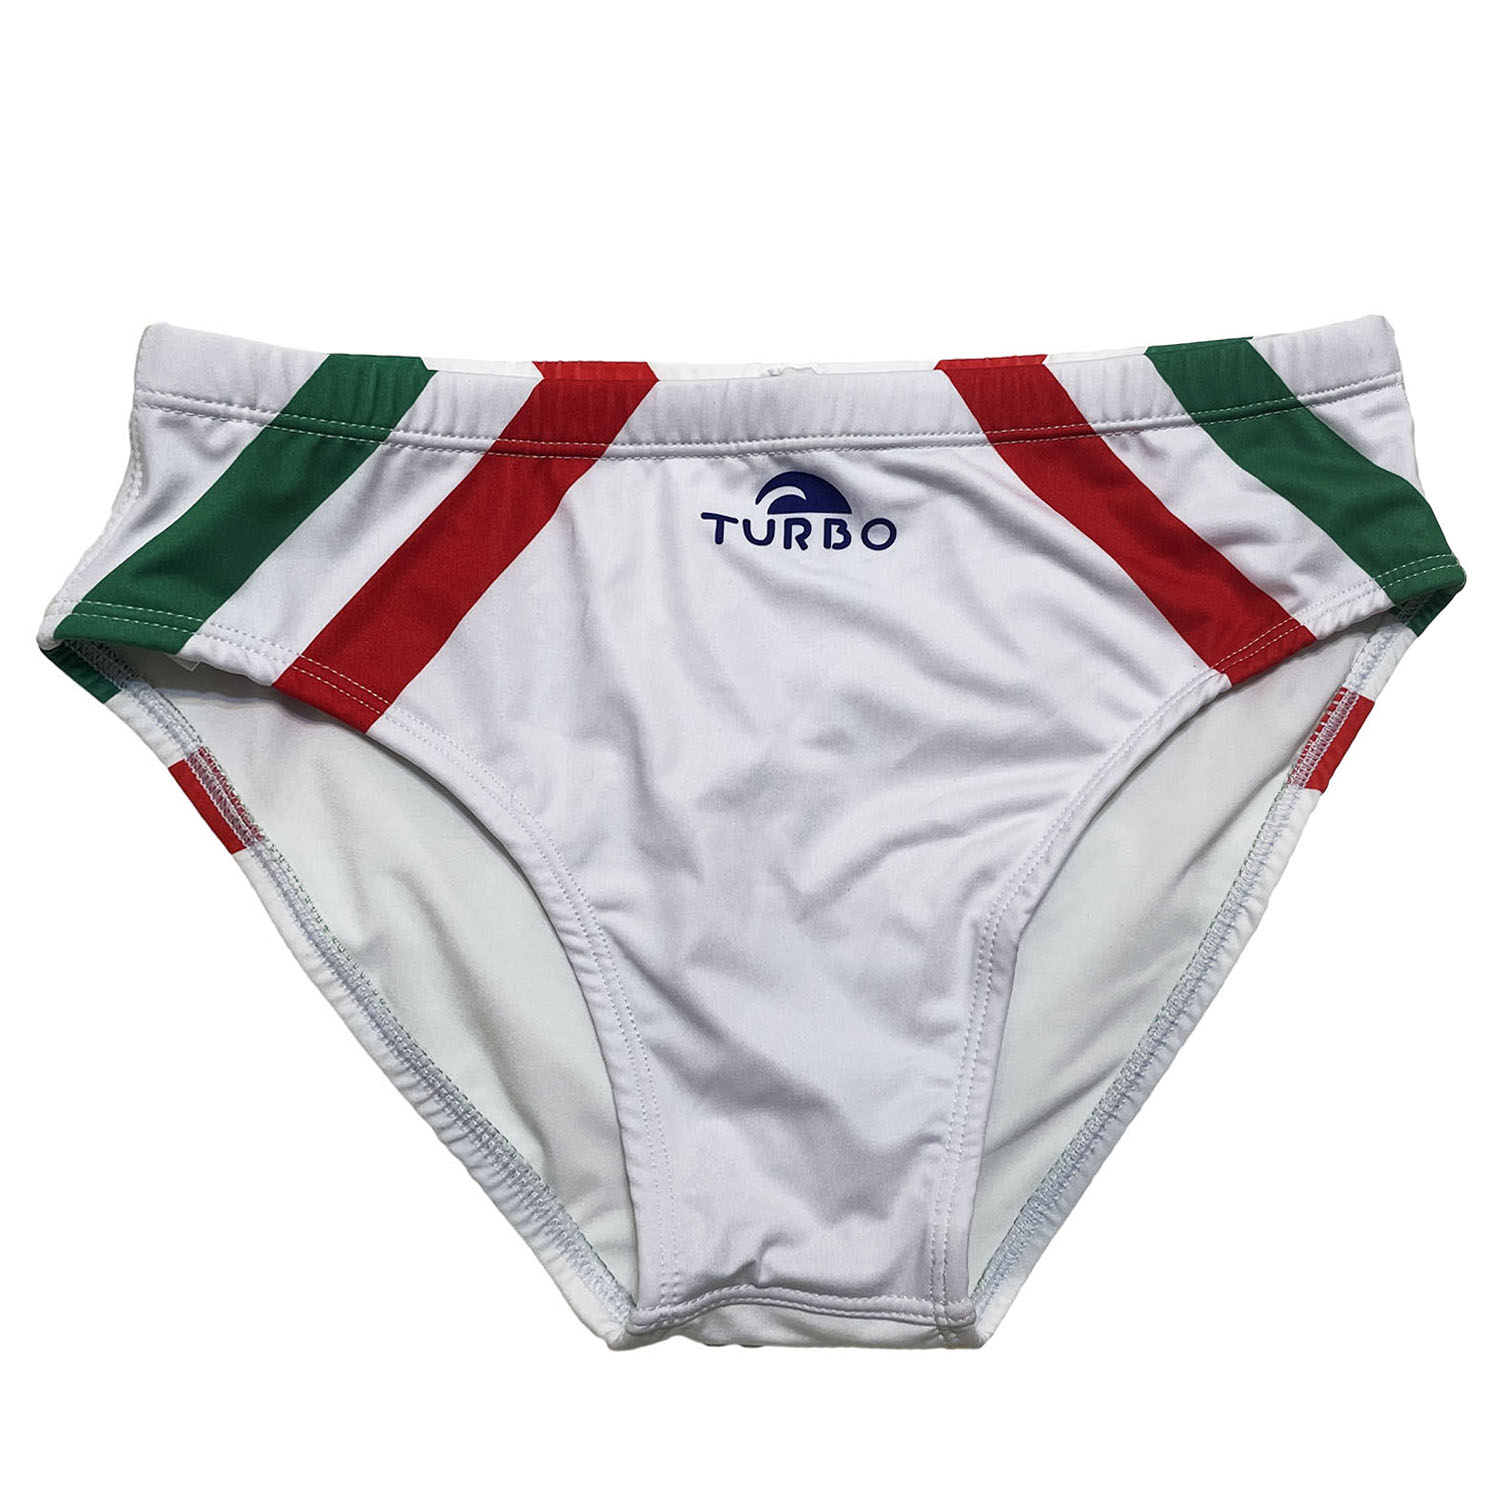 مایو مردانه مدل پرچم ایتالیا 1 کد 2213